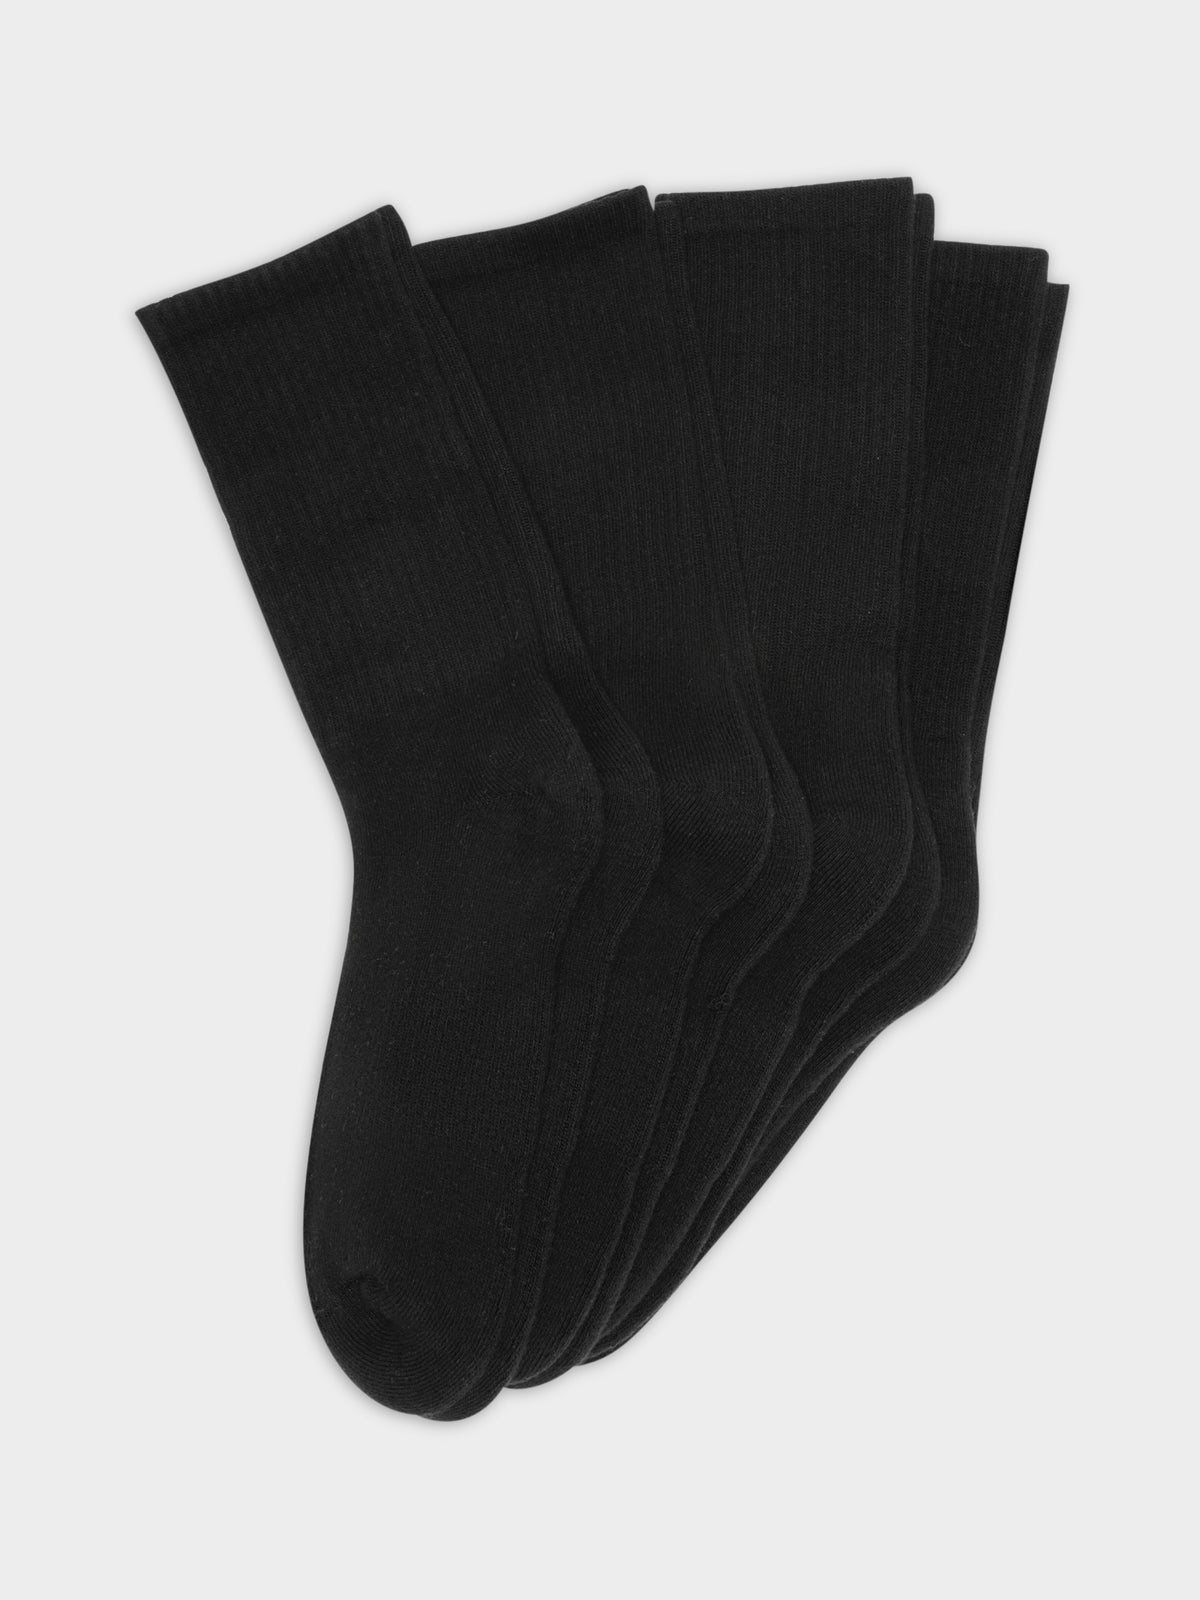 4 Pairs of Classic Socks in Black